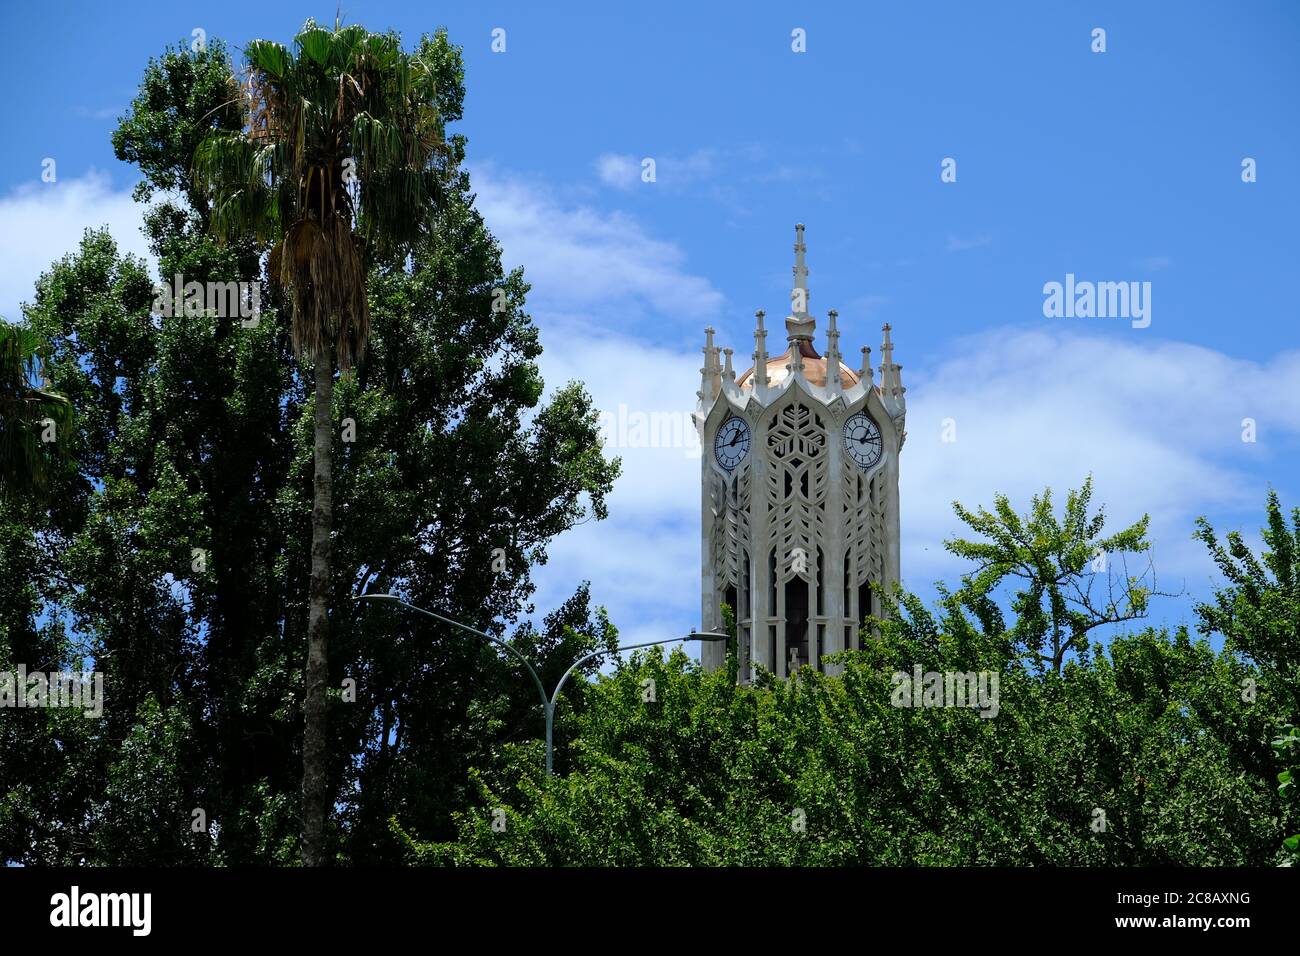 New Zealand Auckland - University Of Auckland - Clock Tower Stock Photo